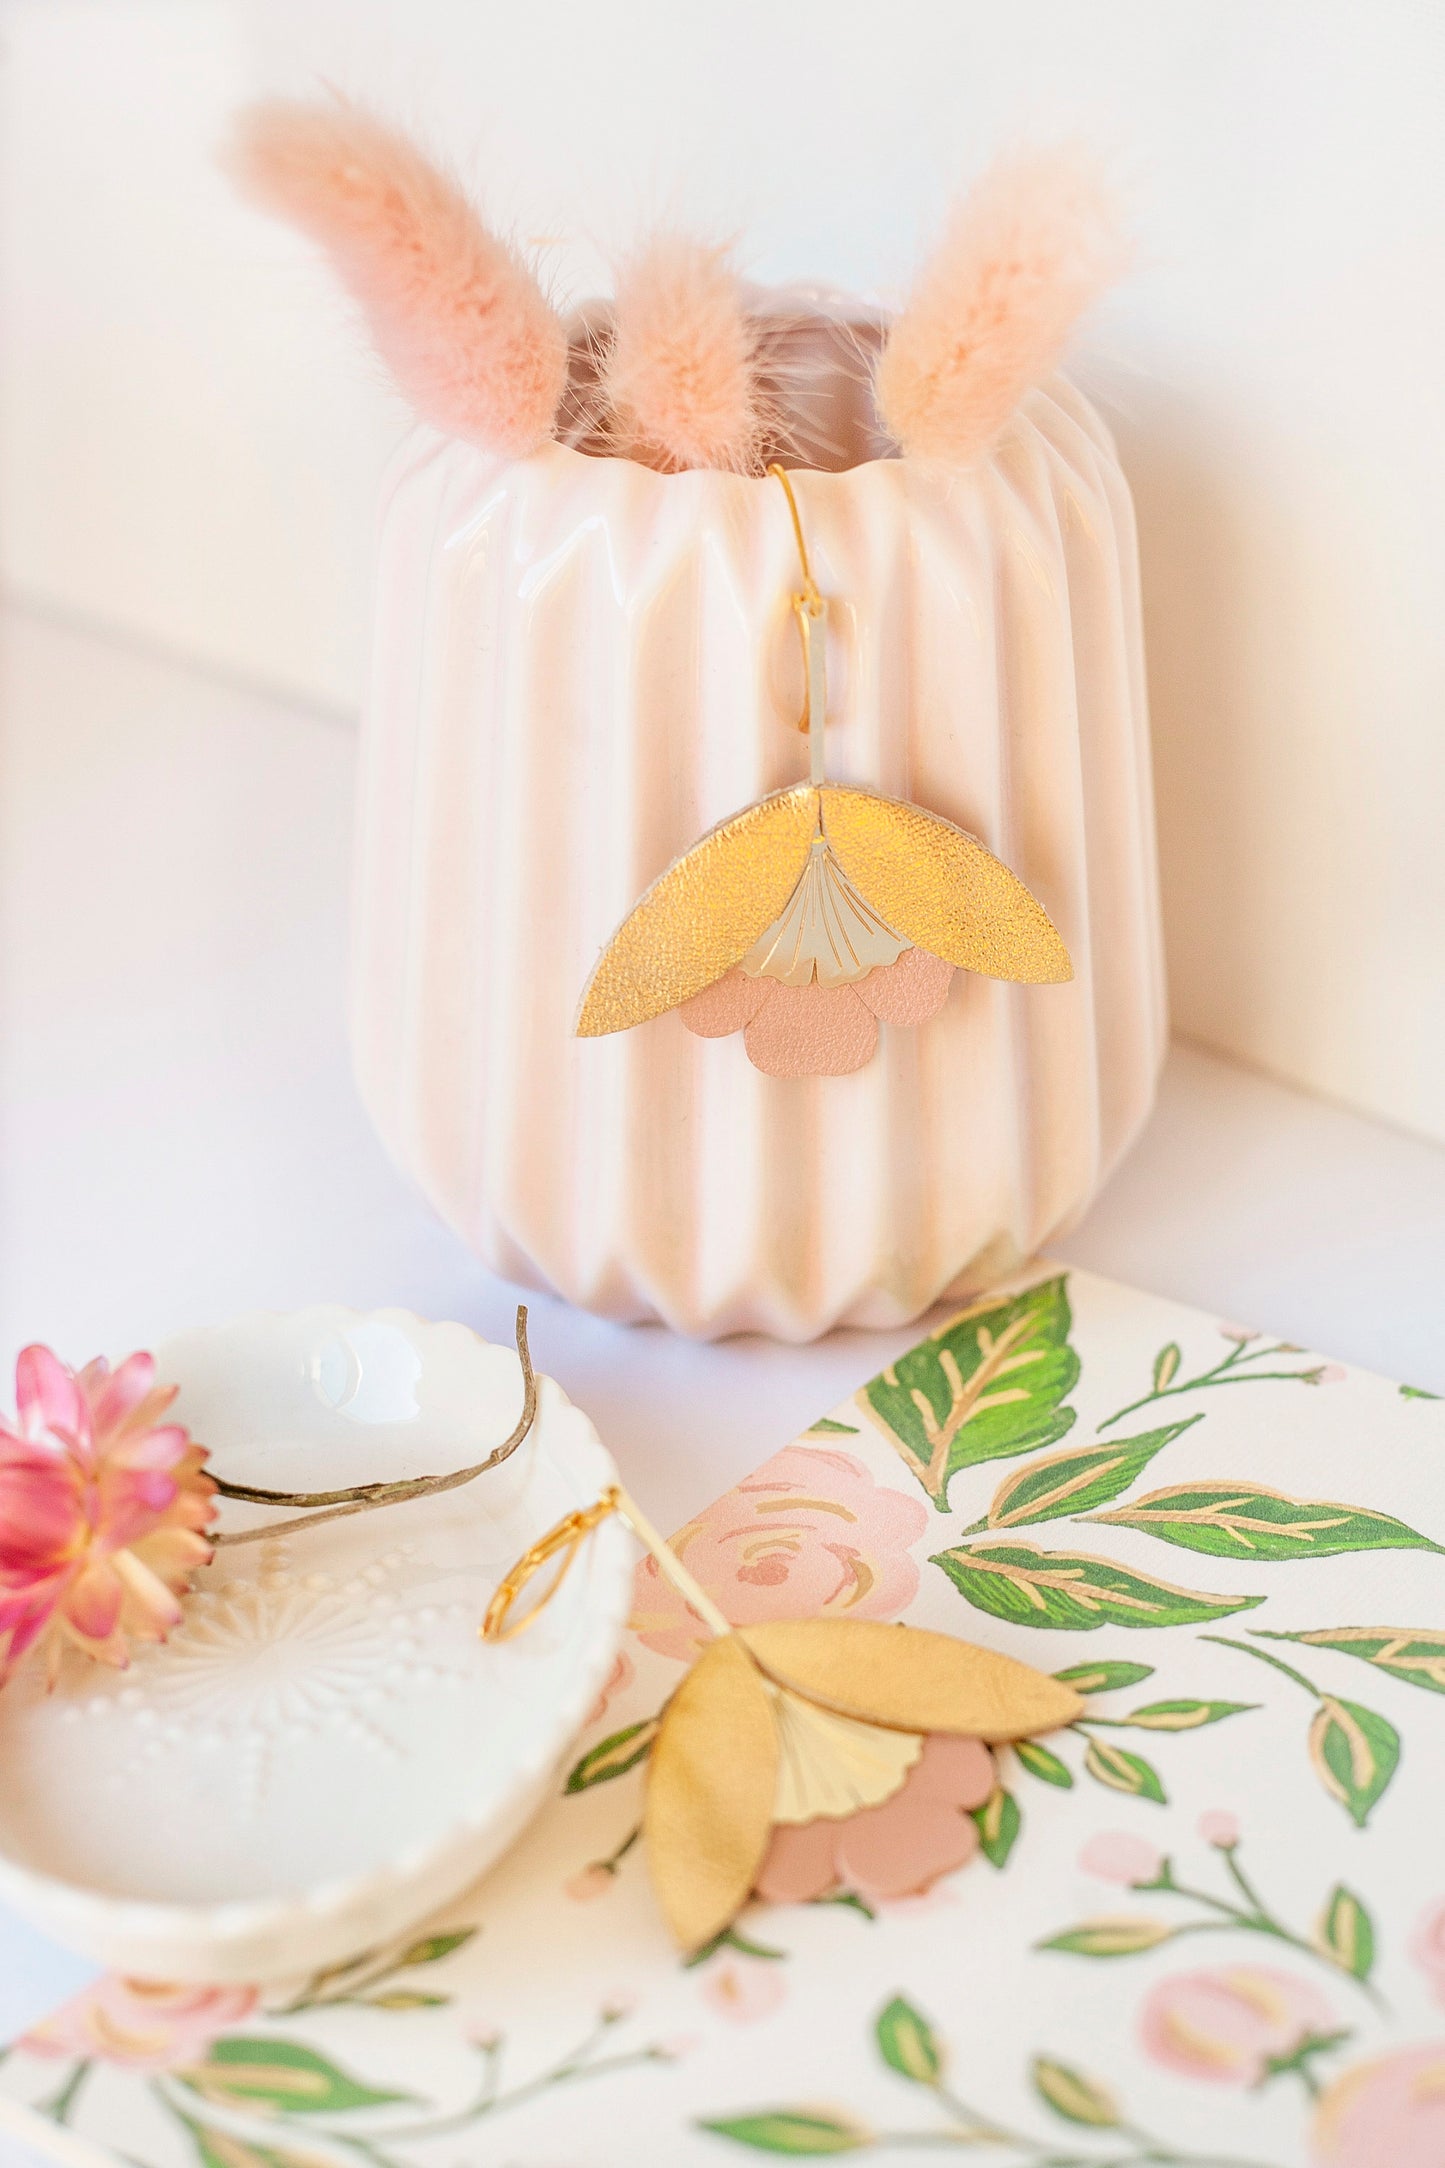 Ginkgo-Blumenohrringe aus goldenem und rosafarbenem Leder